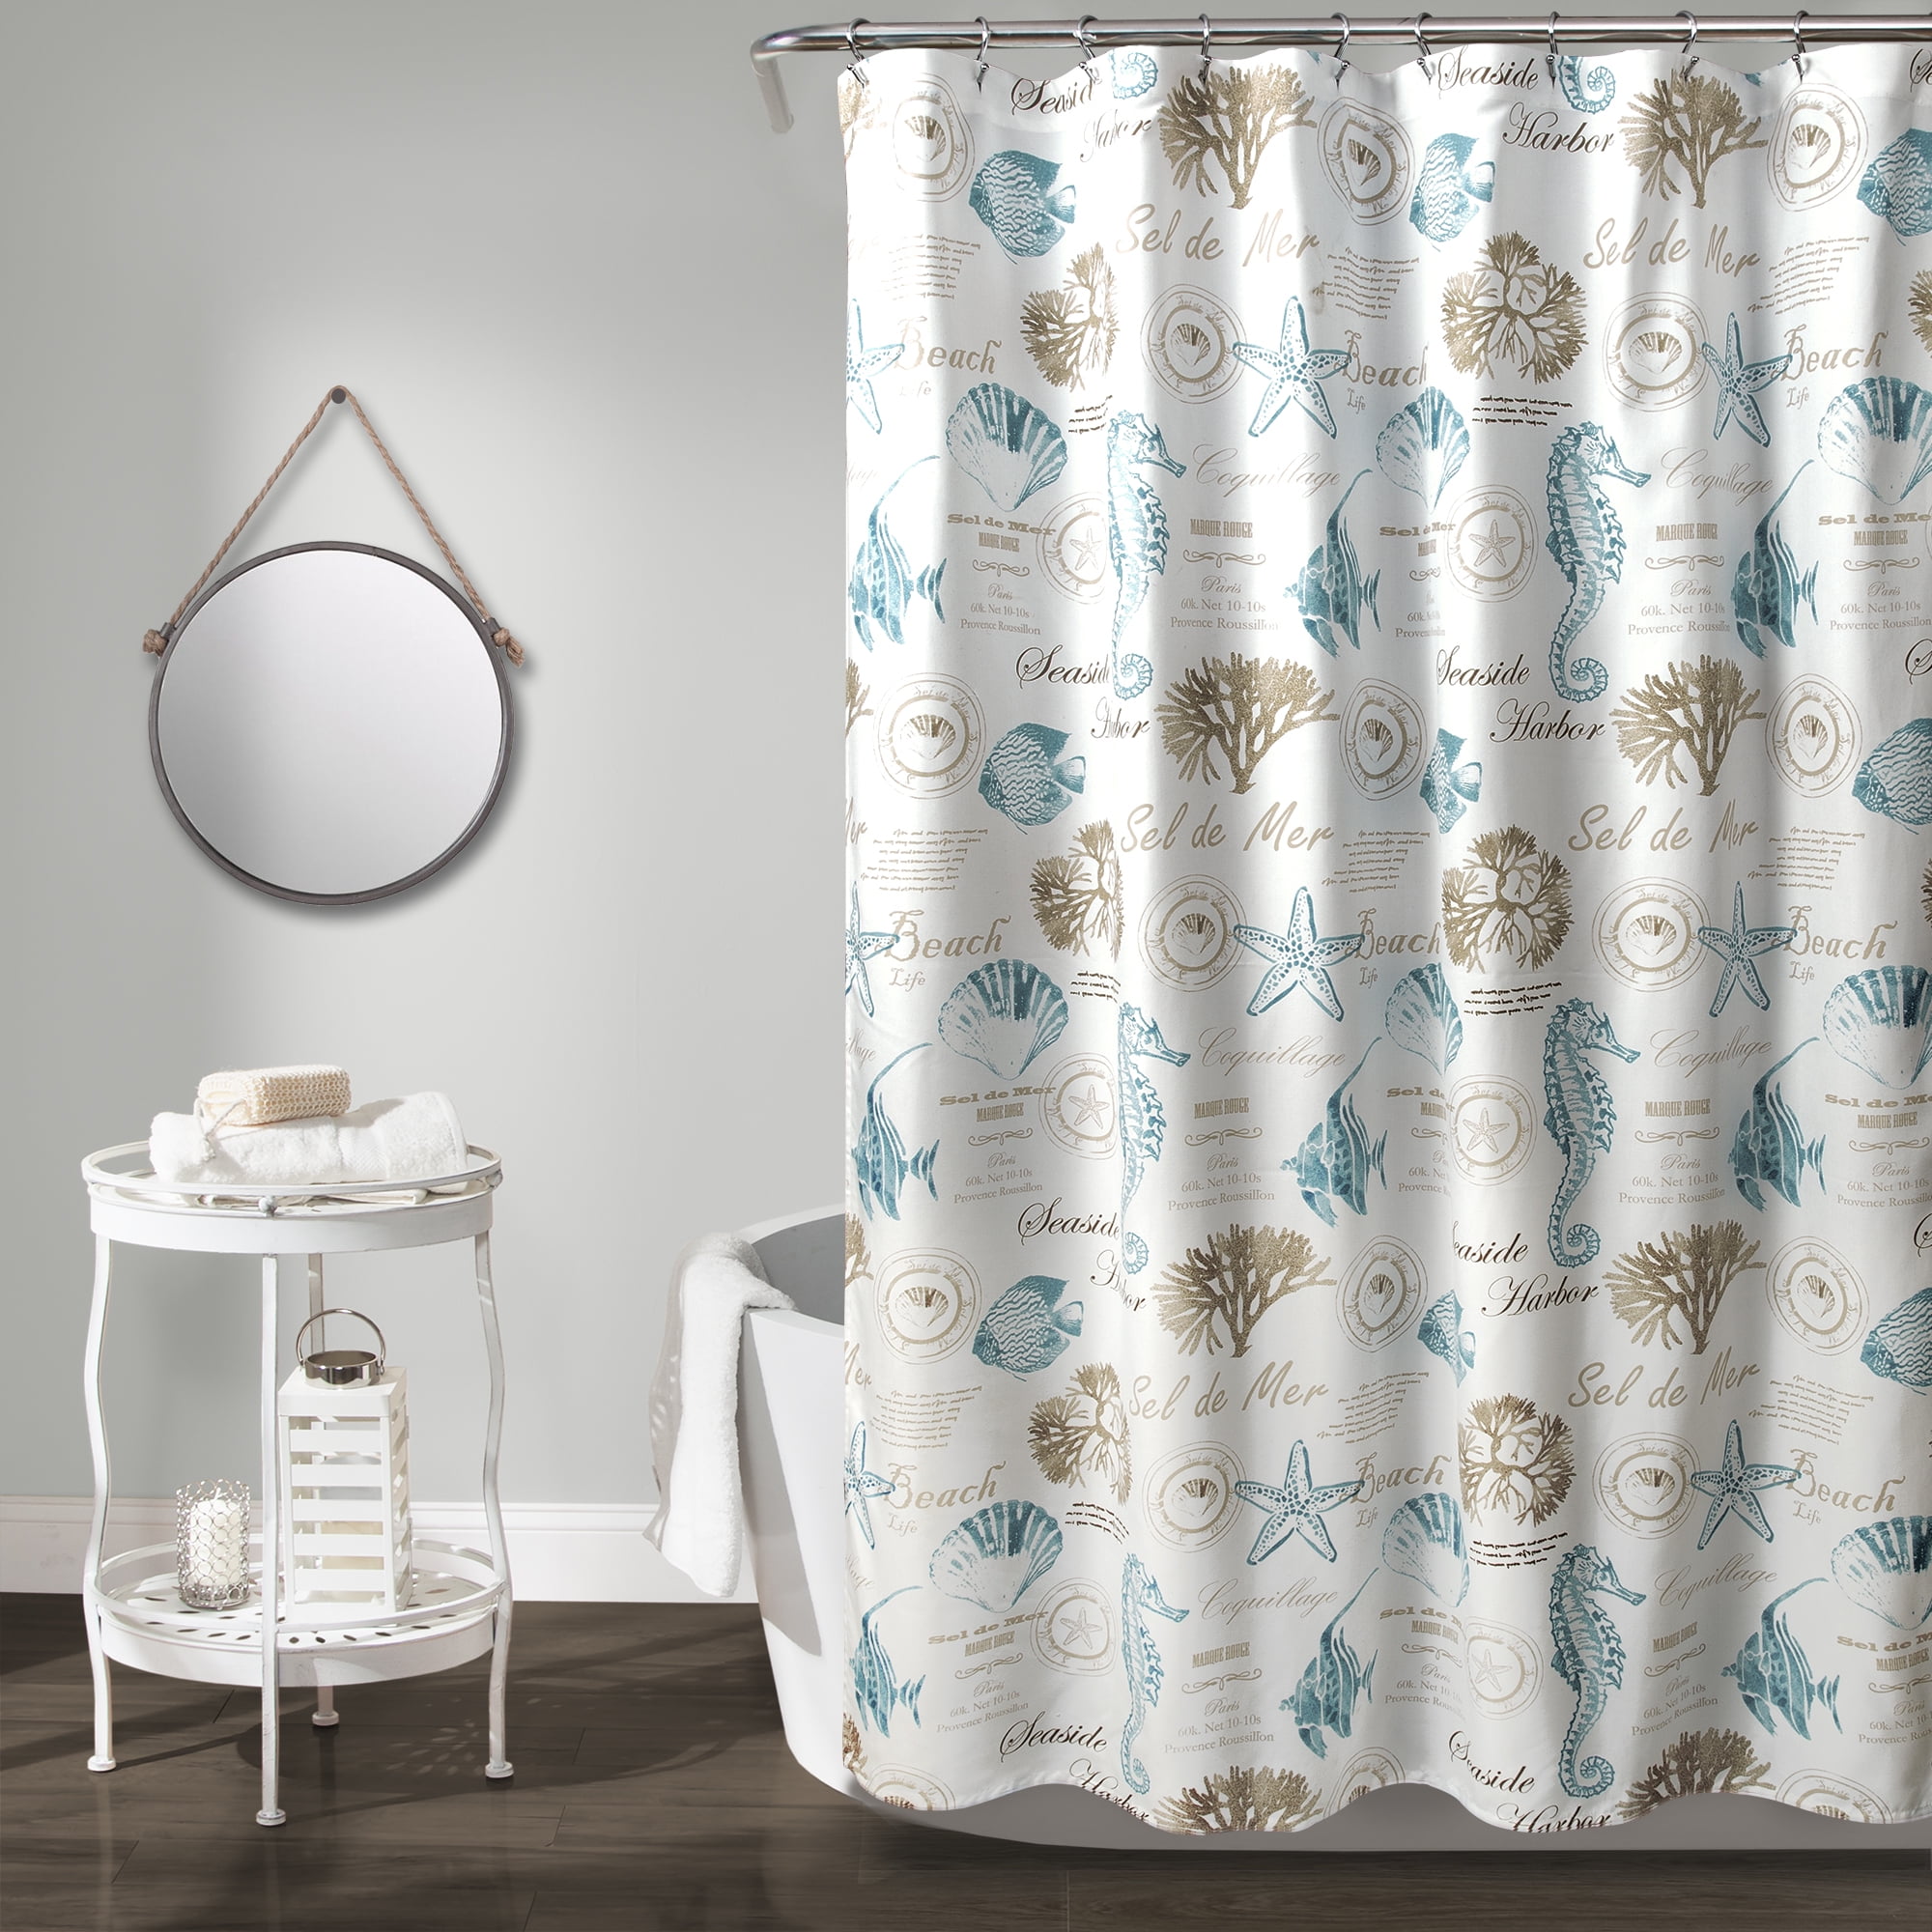 Teal Shower Curtain Light Blue Coastal Sets Bathroom Fabric Rings 72x72 Inch 